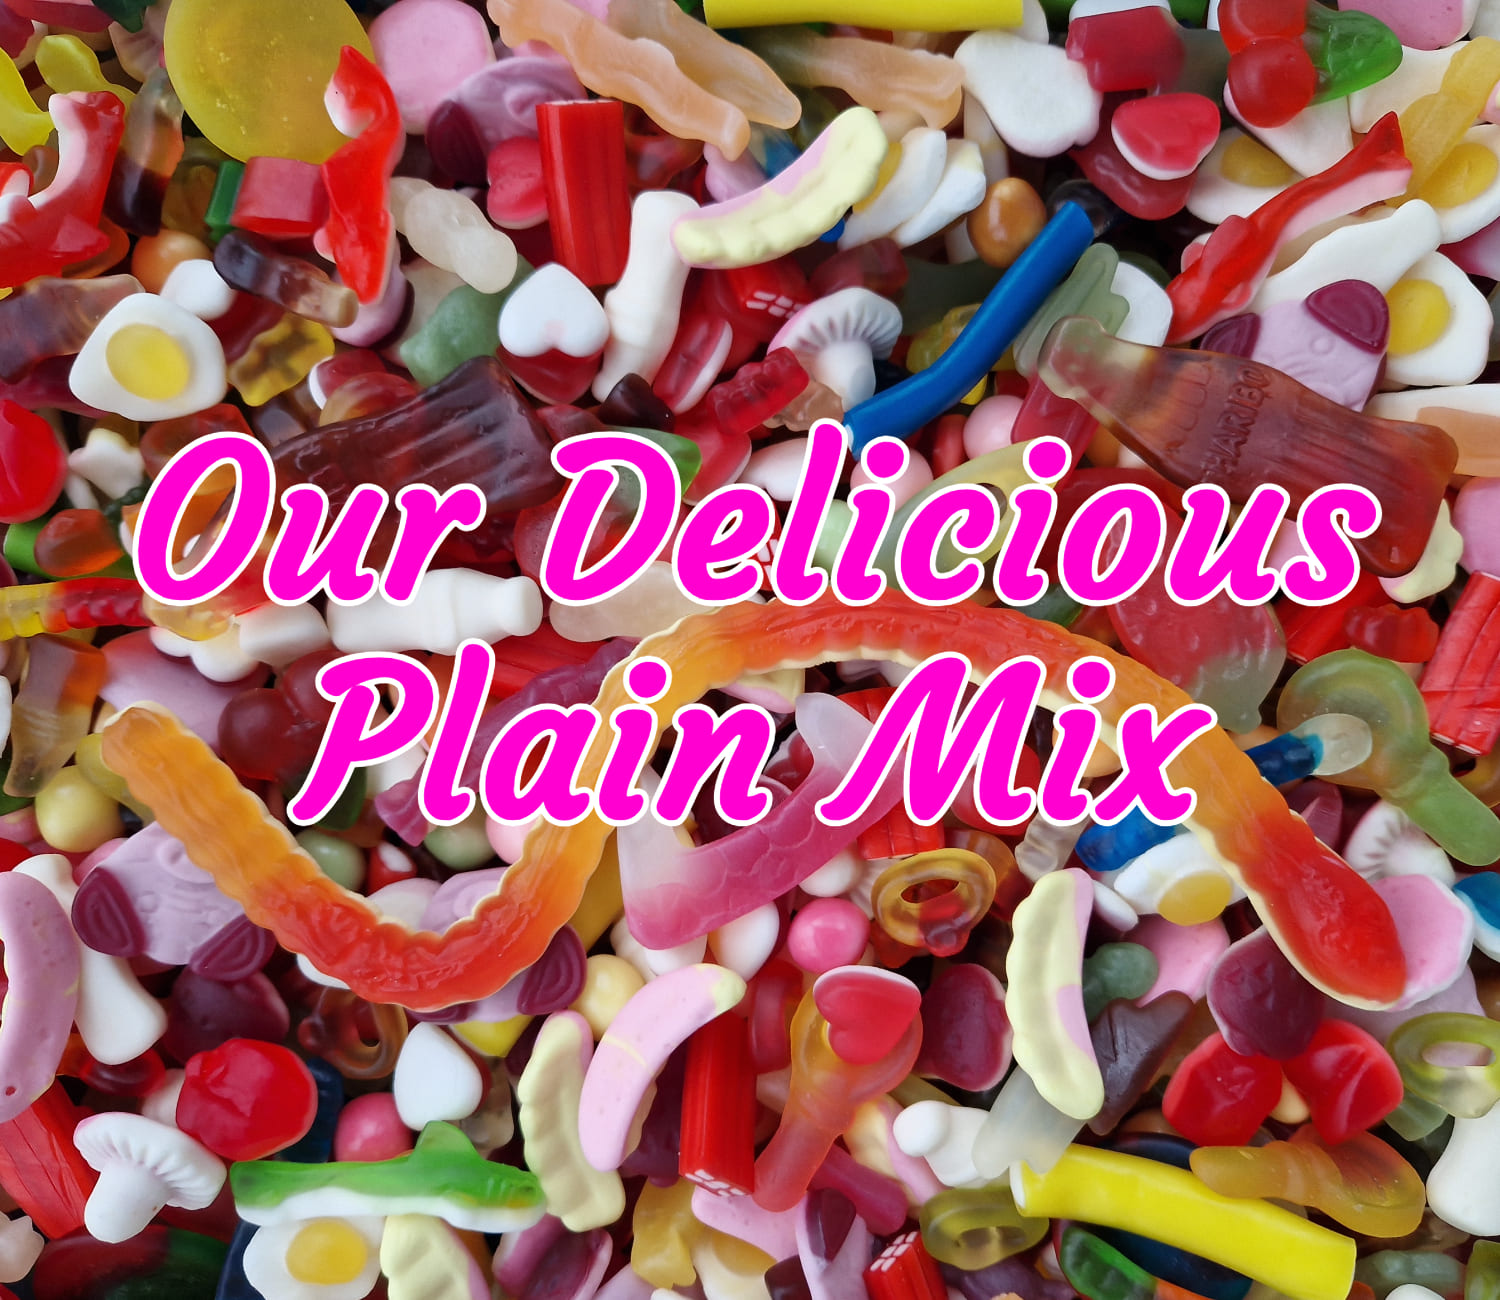 Sweet Sensations Plain Mix Mobile Banner